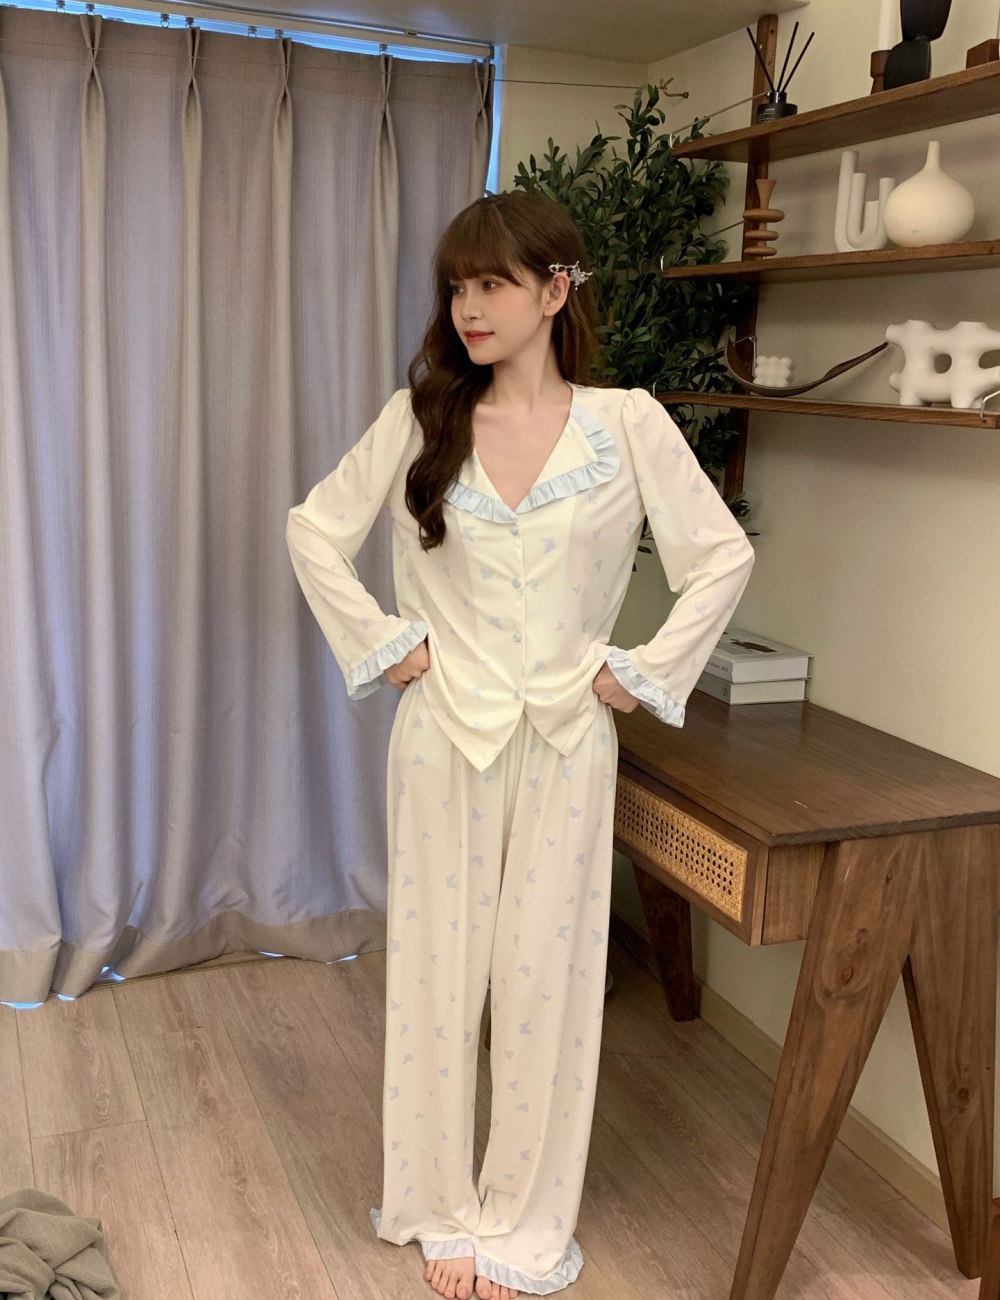 Modal summer cardigan maiden pajamas for women